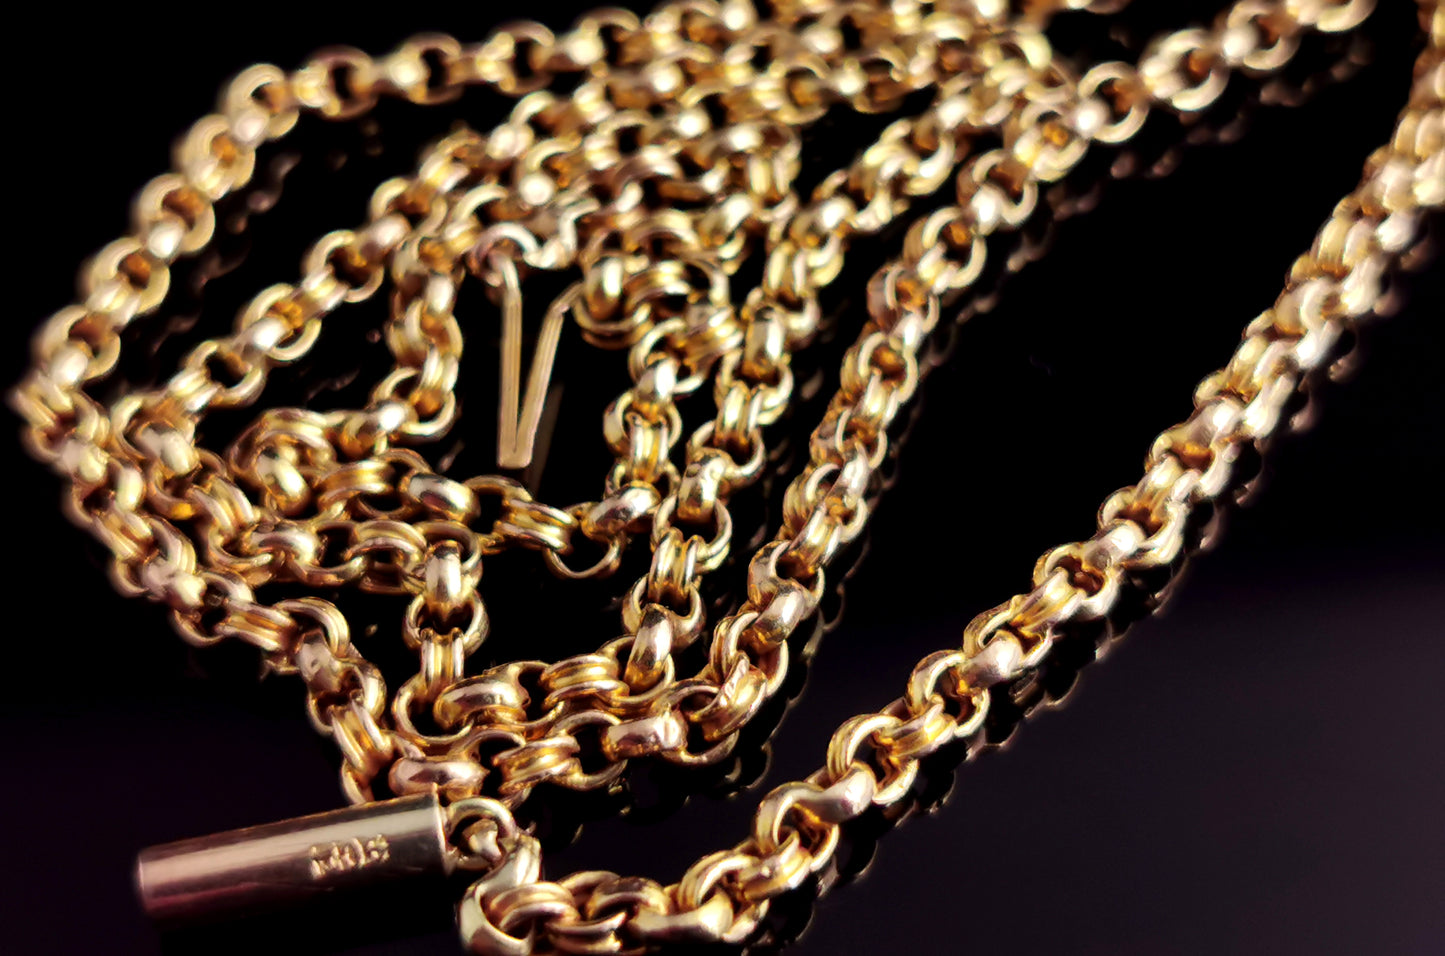 Antique 18ct gold fancy rolo link chain necklace, Edwardian